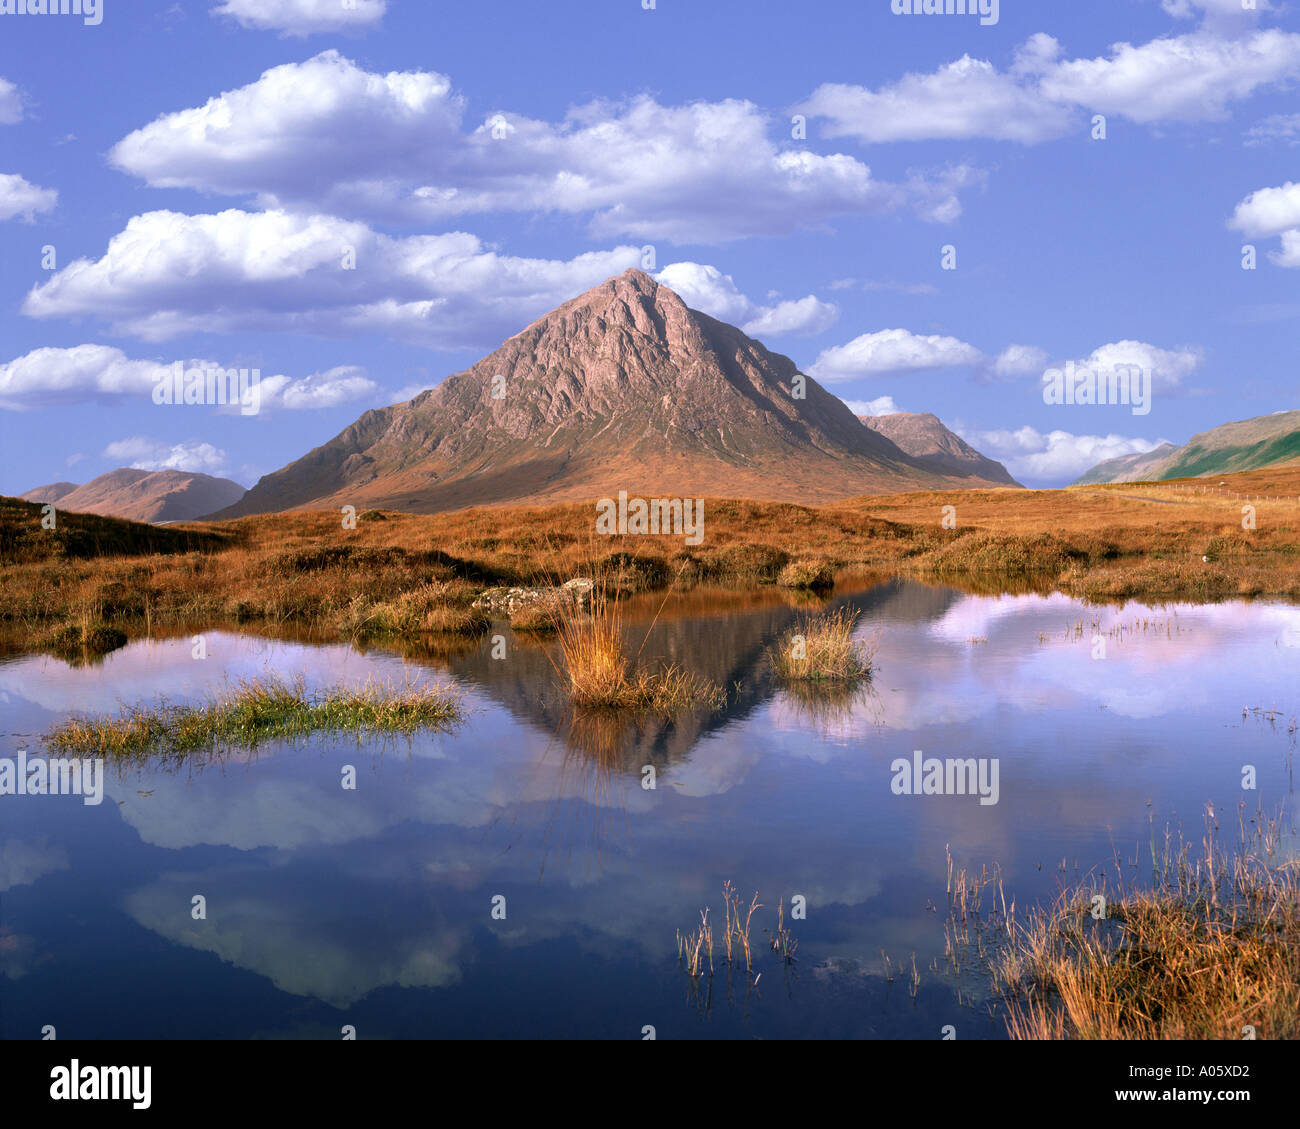 GB - Scozia: Buchaille Etive Mor nelle Highlands Foto Stock